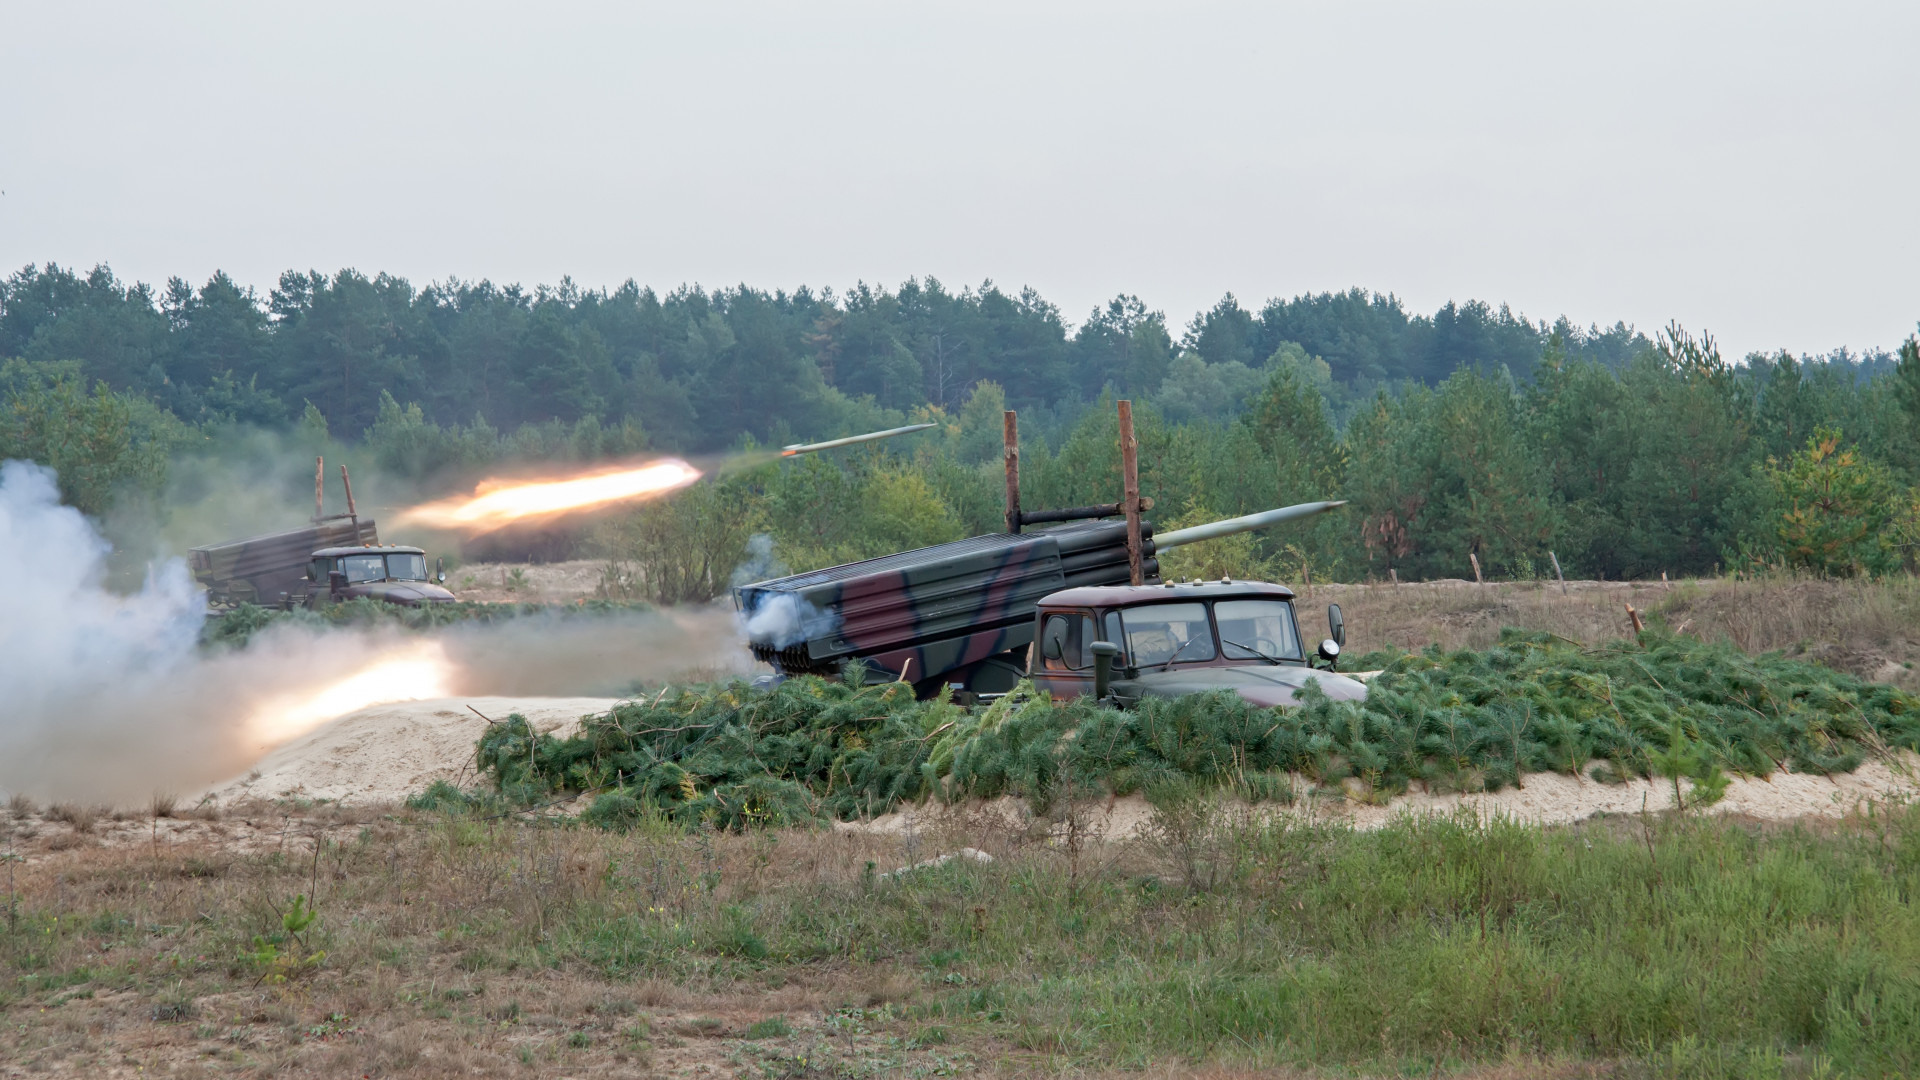 bm 21 grad raketa sorozatveto ukrajnai haboru orosz ukrajna nyari kep stock 586022